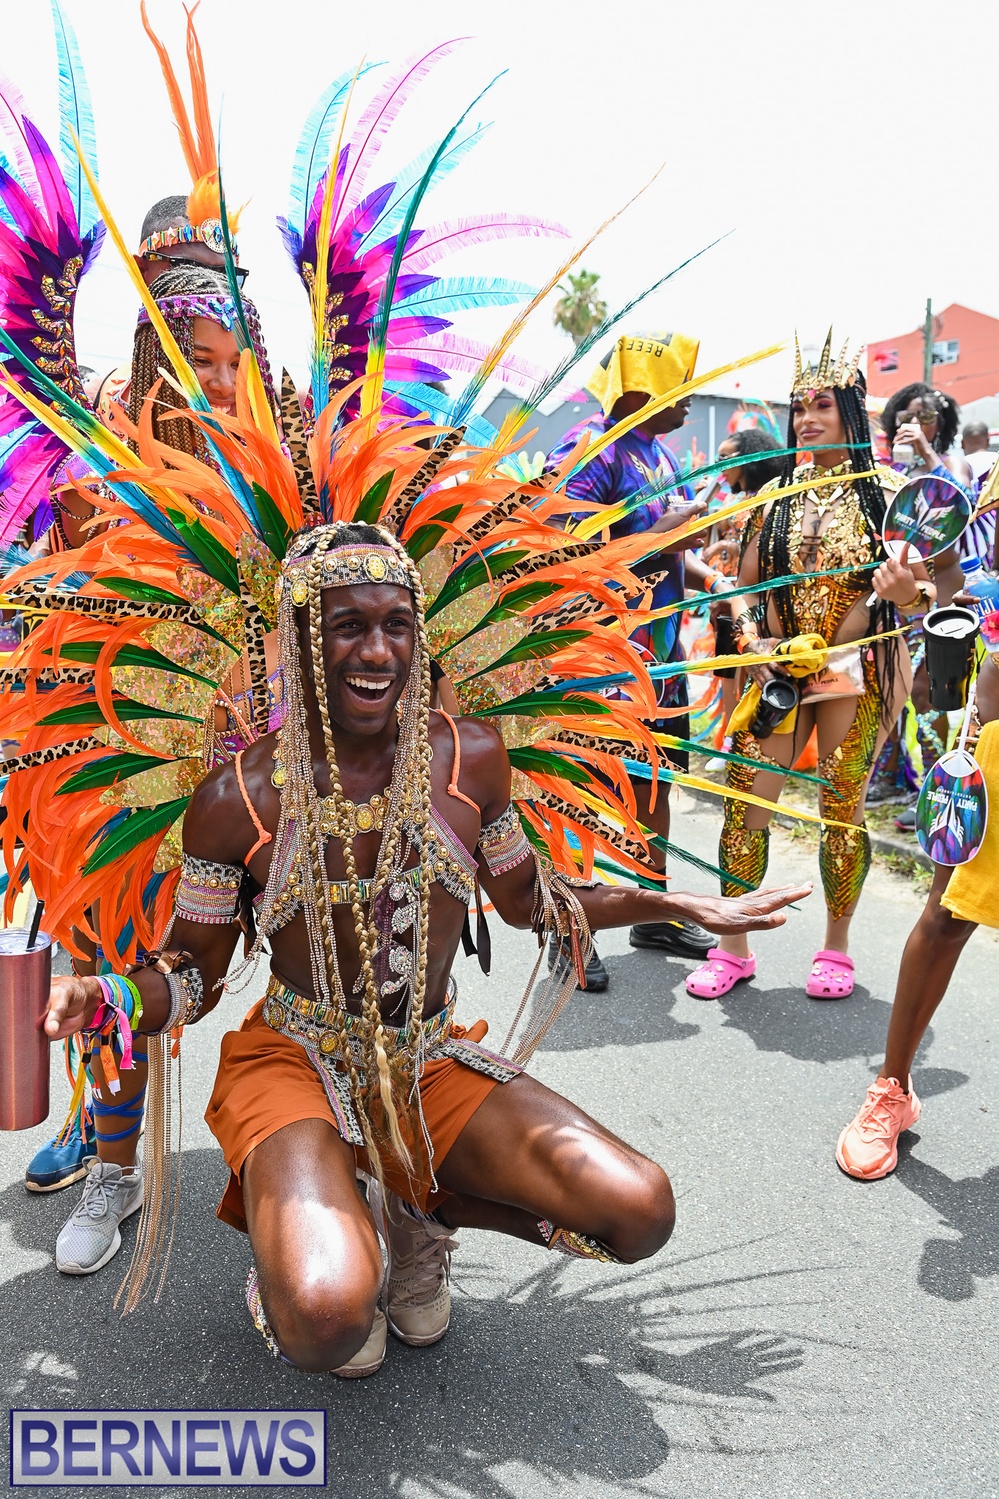 Carnival in Bermuda ‘Revel de Road’ event  party June 2022 AW (6)